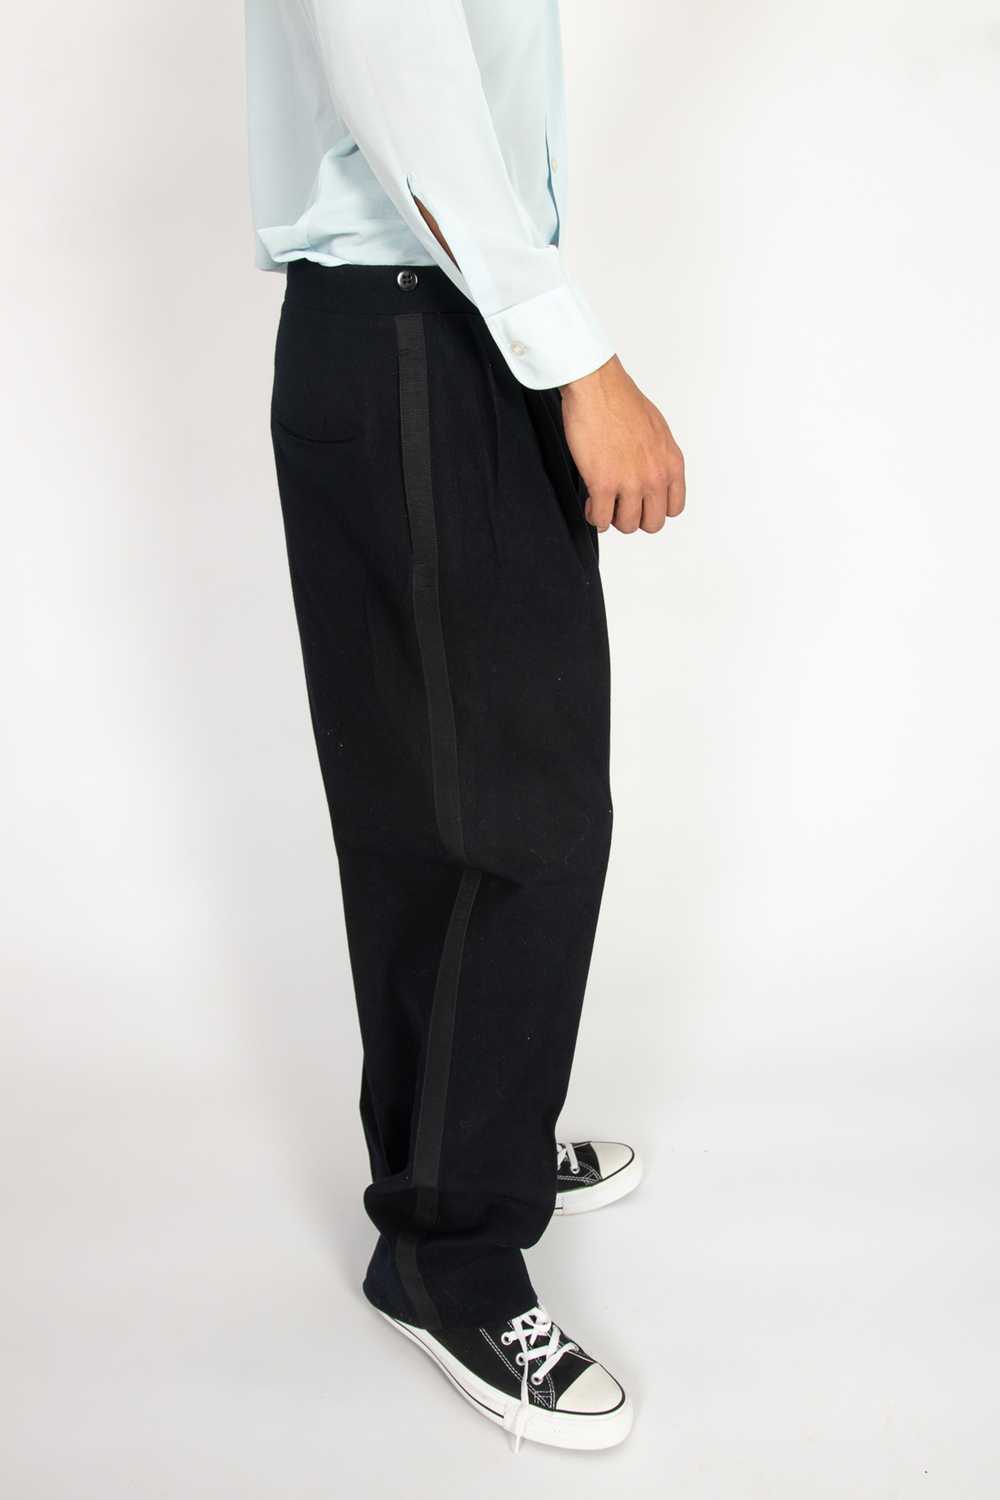 Vintage 1950s Tuxedo Pants 421 - image 2